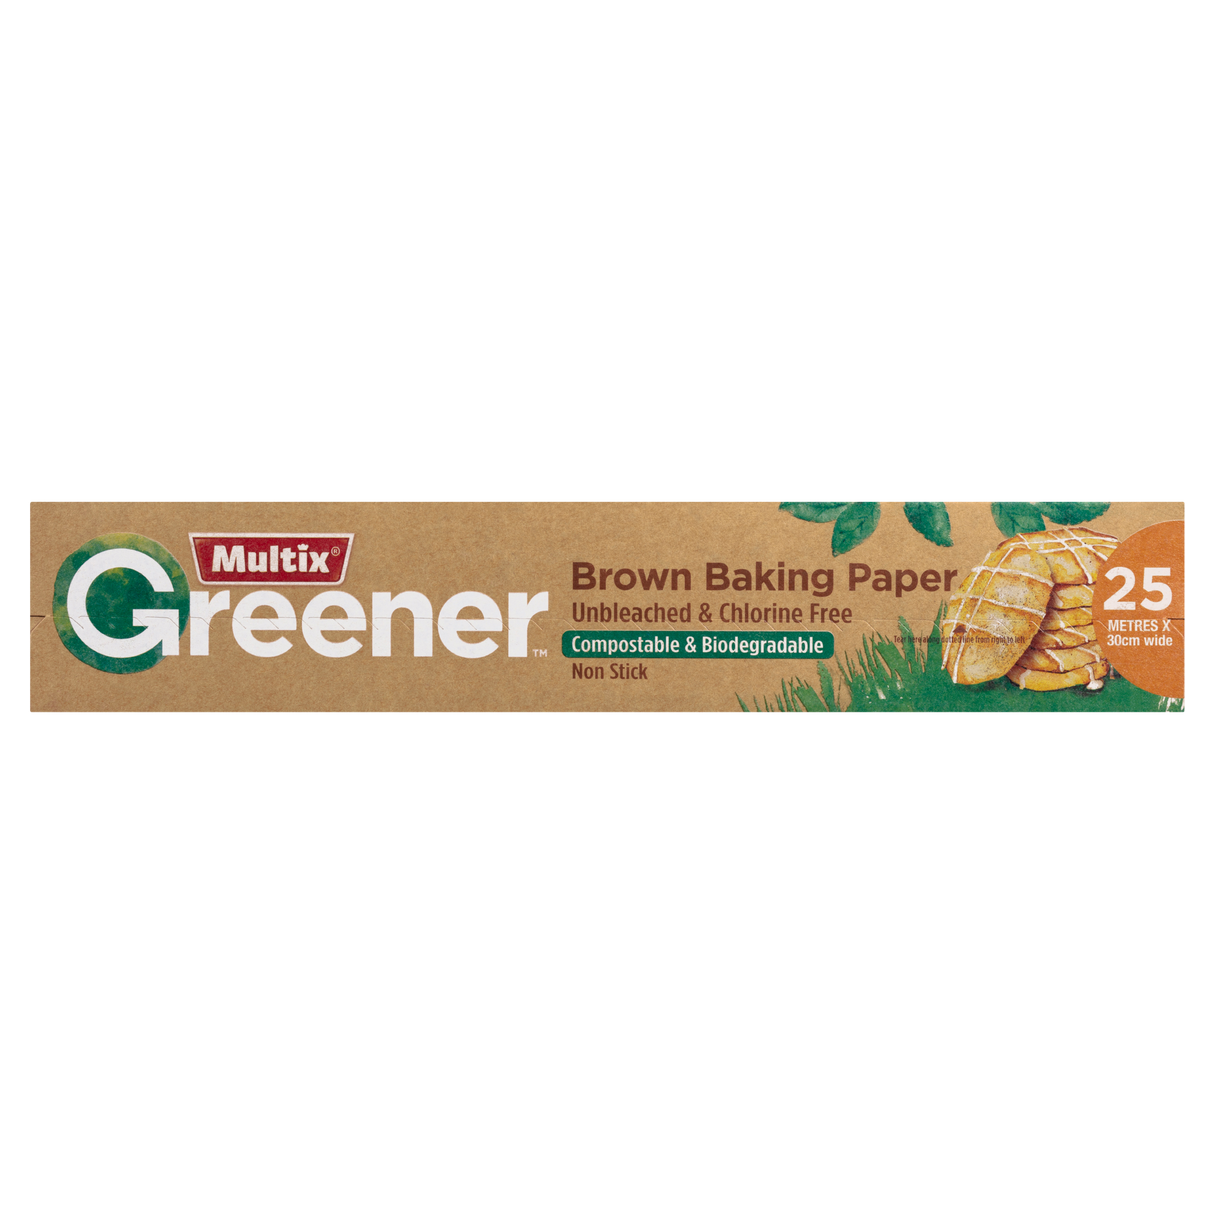 Multix Greener Biodegradable Baking Paper 25mx30cm